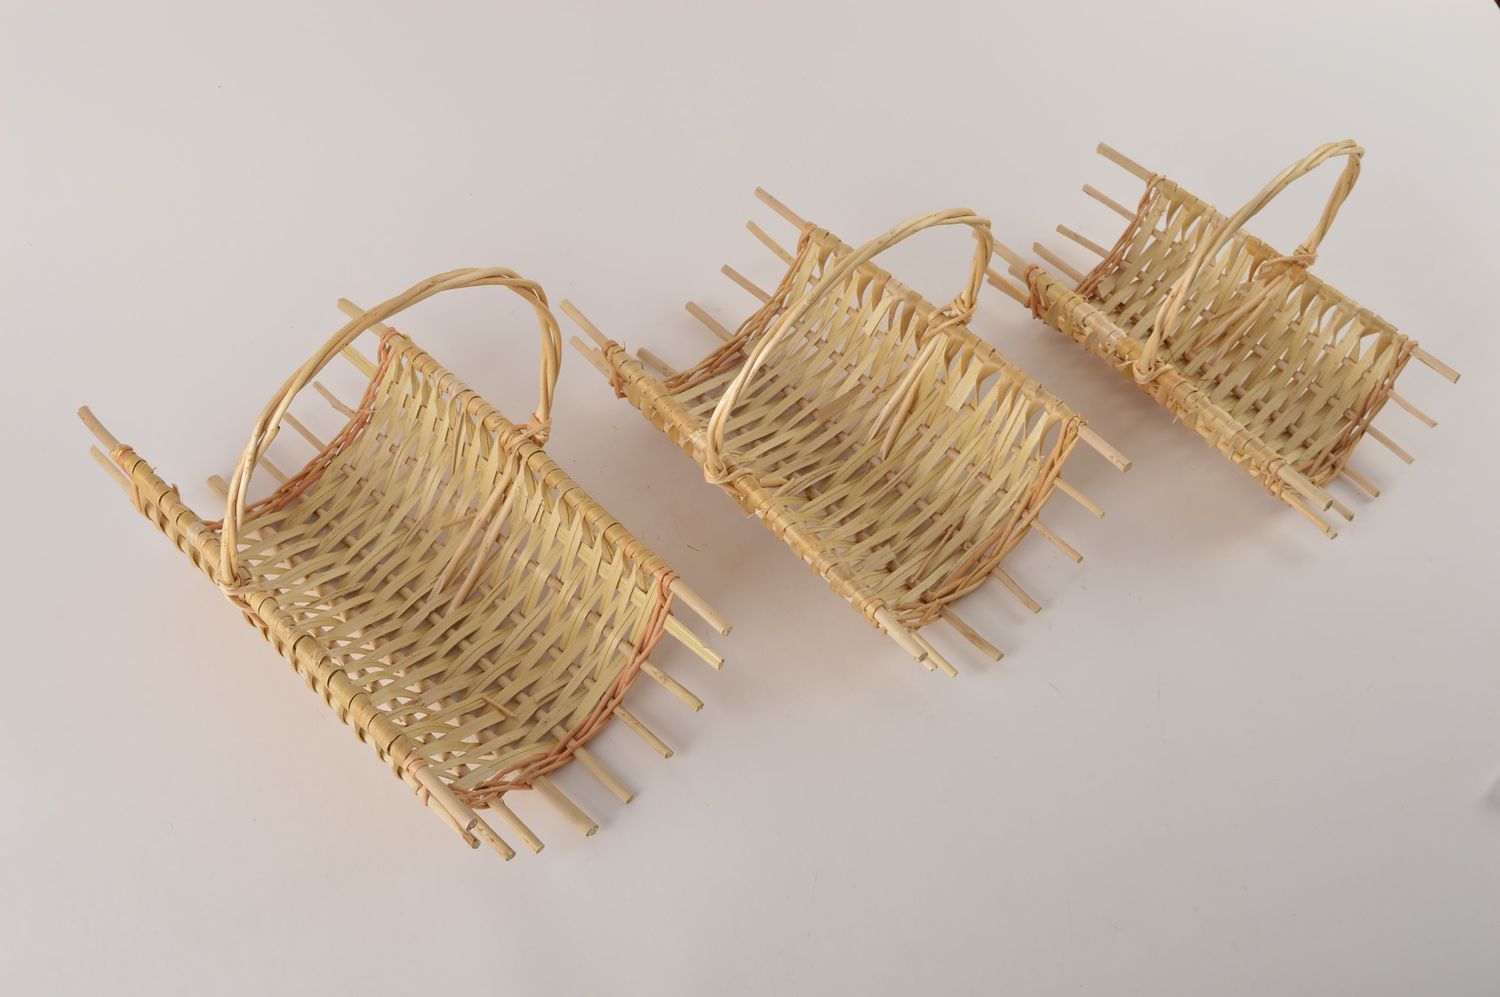 Handmade beautiful decorative baskets 3 stylish woven baskets present for women photo 2